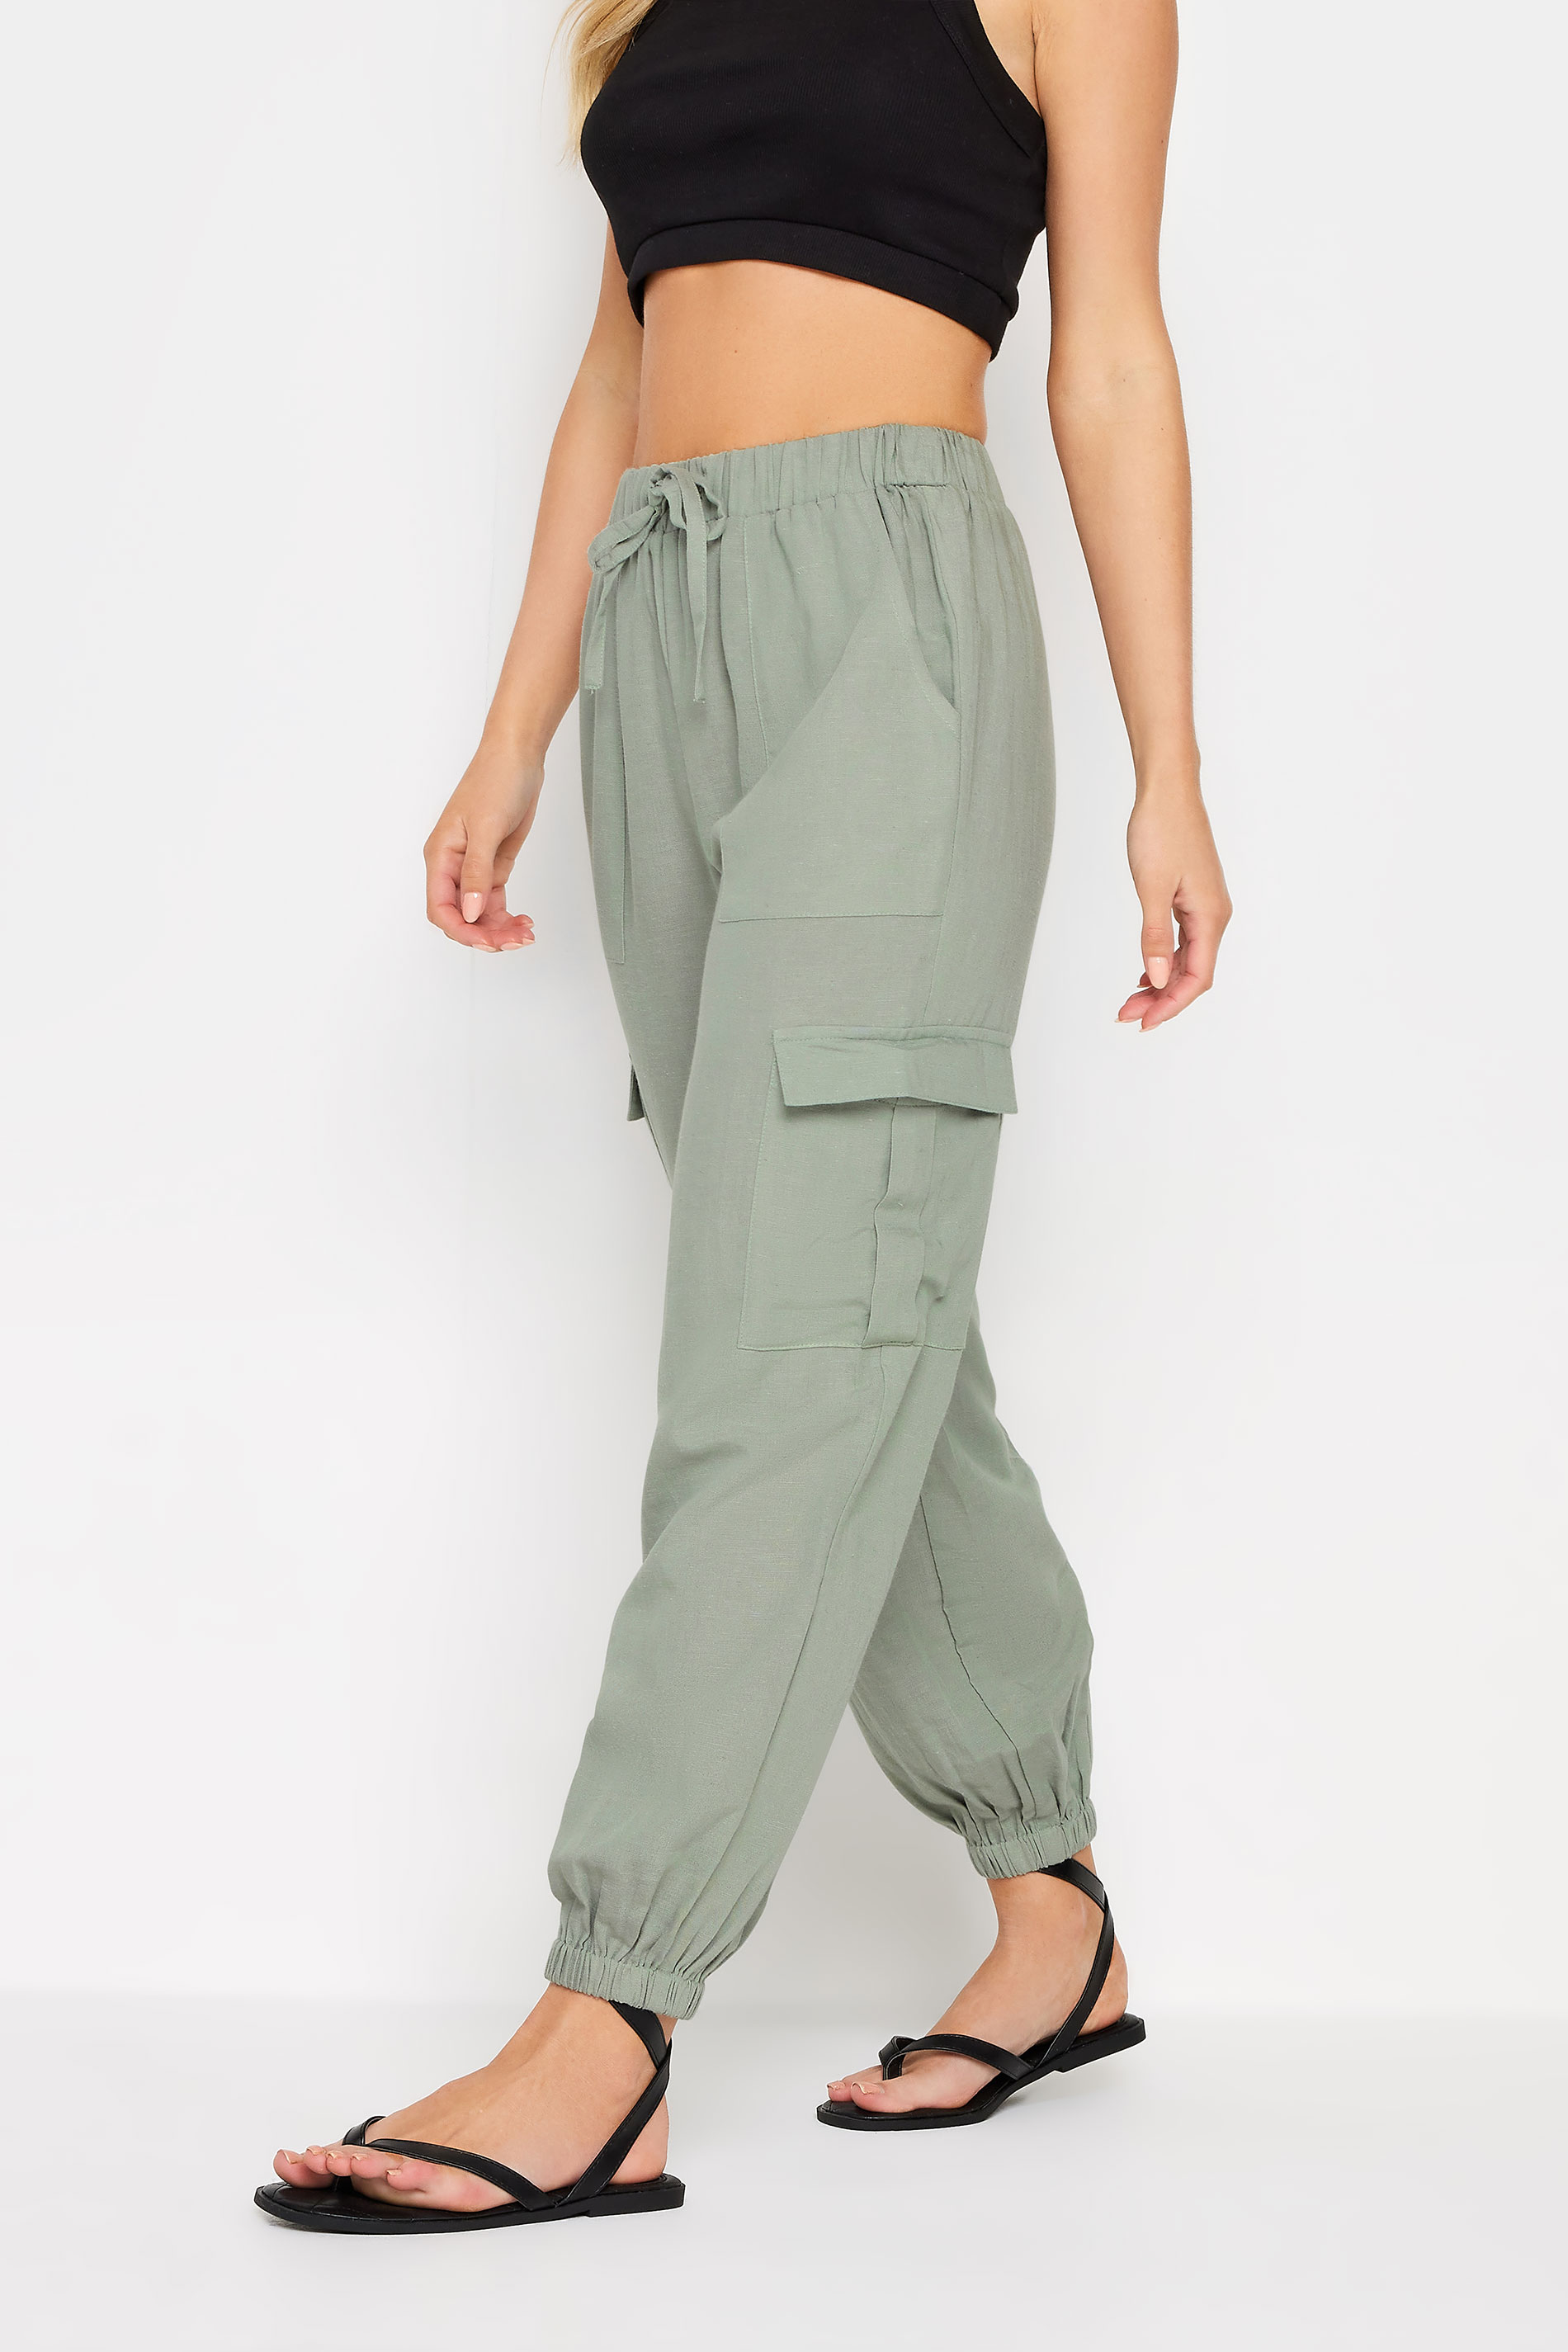 PixieGirl Petite Womens Sage Green Linen Cuffed Cargo Trousers | PixieGirl 3